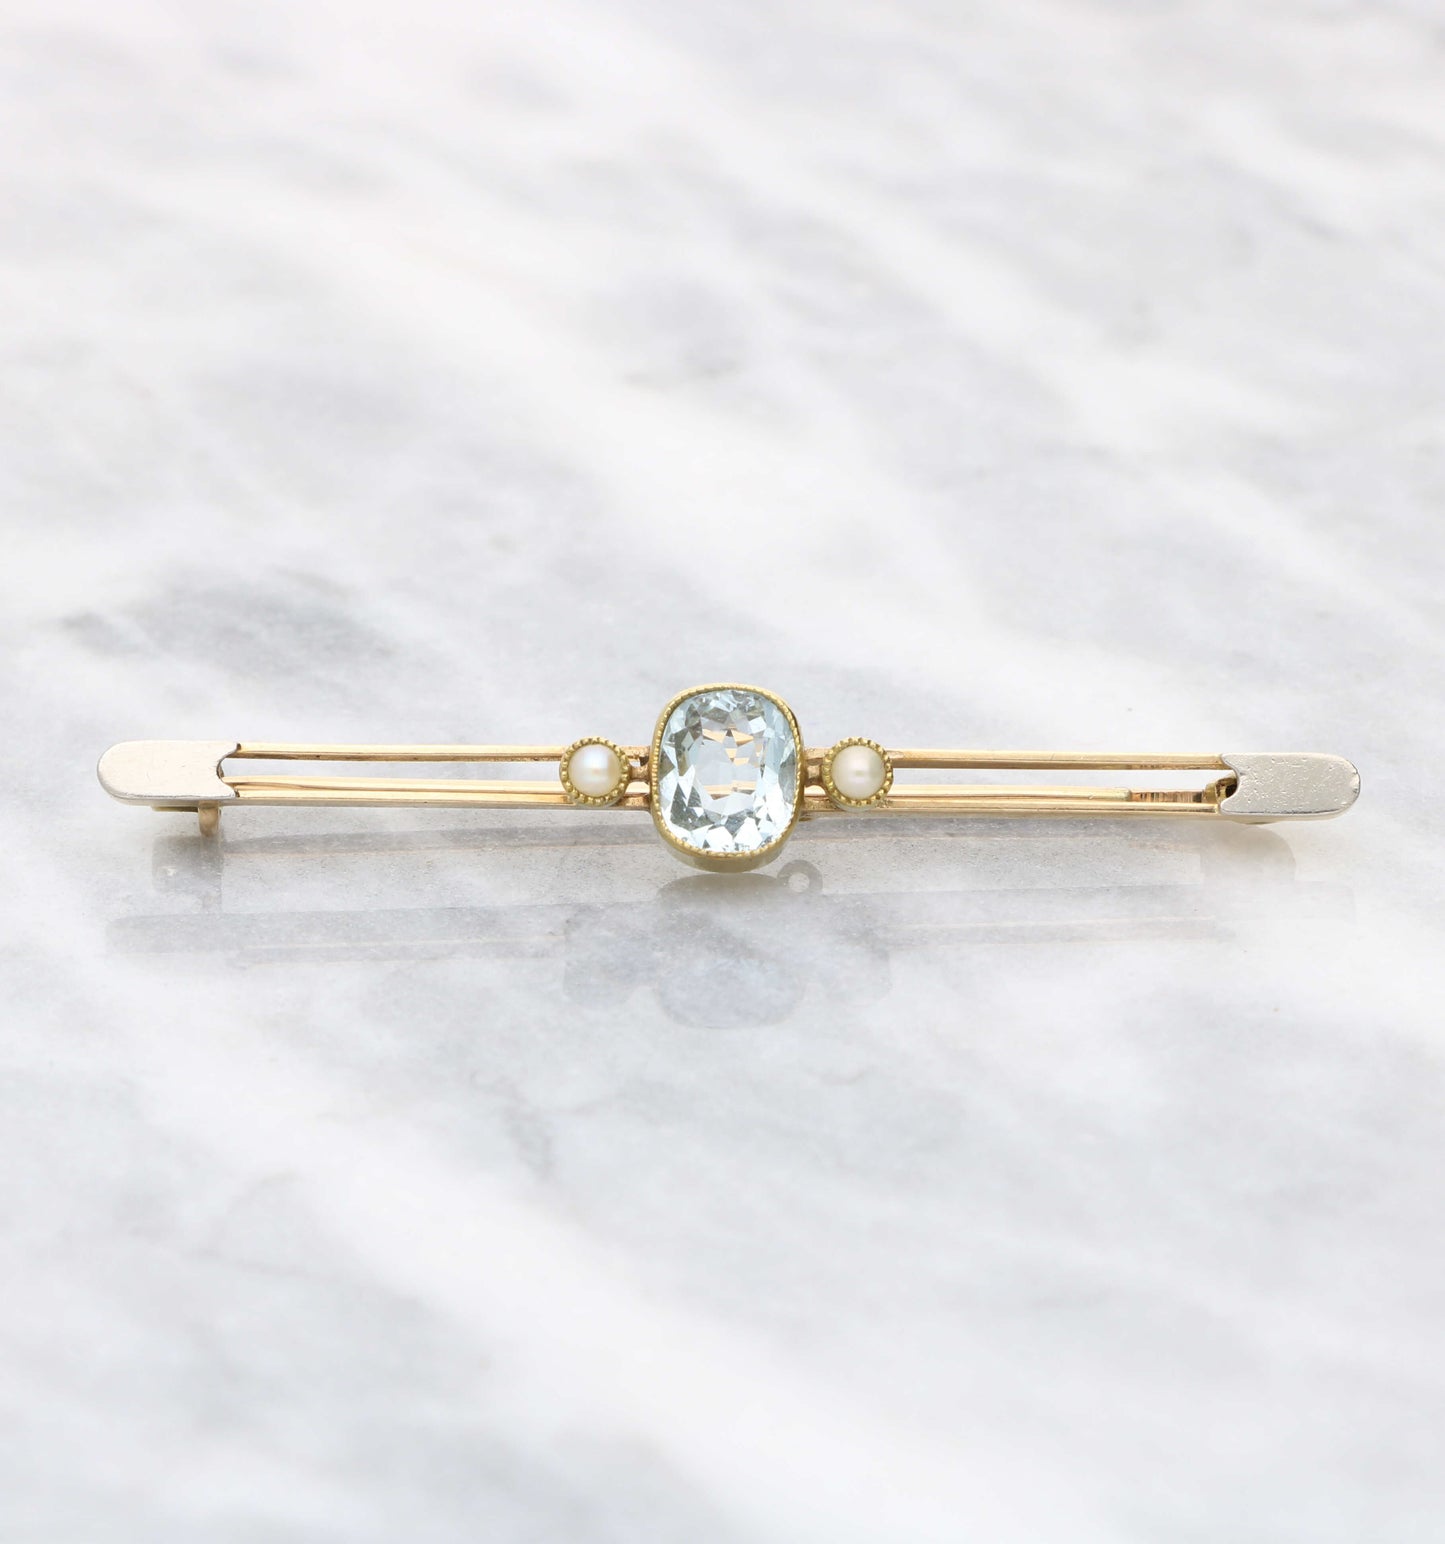 15ct rose gold aquamarine and pearl brooch